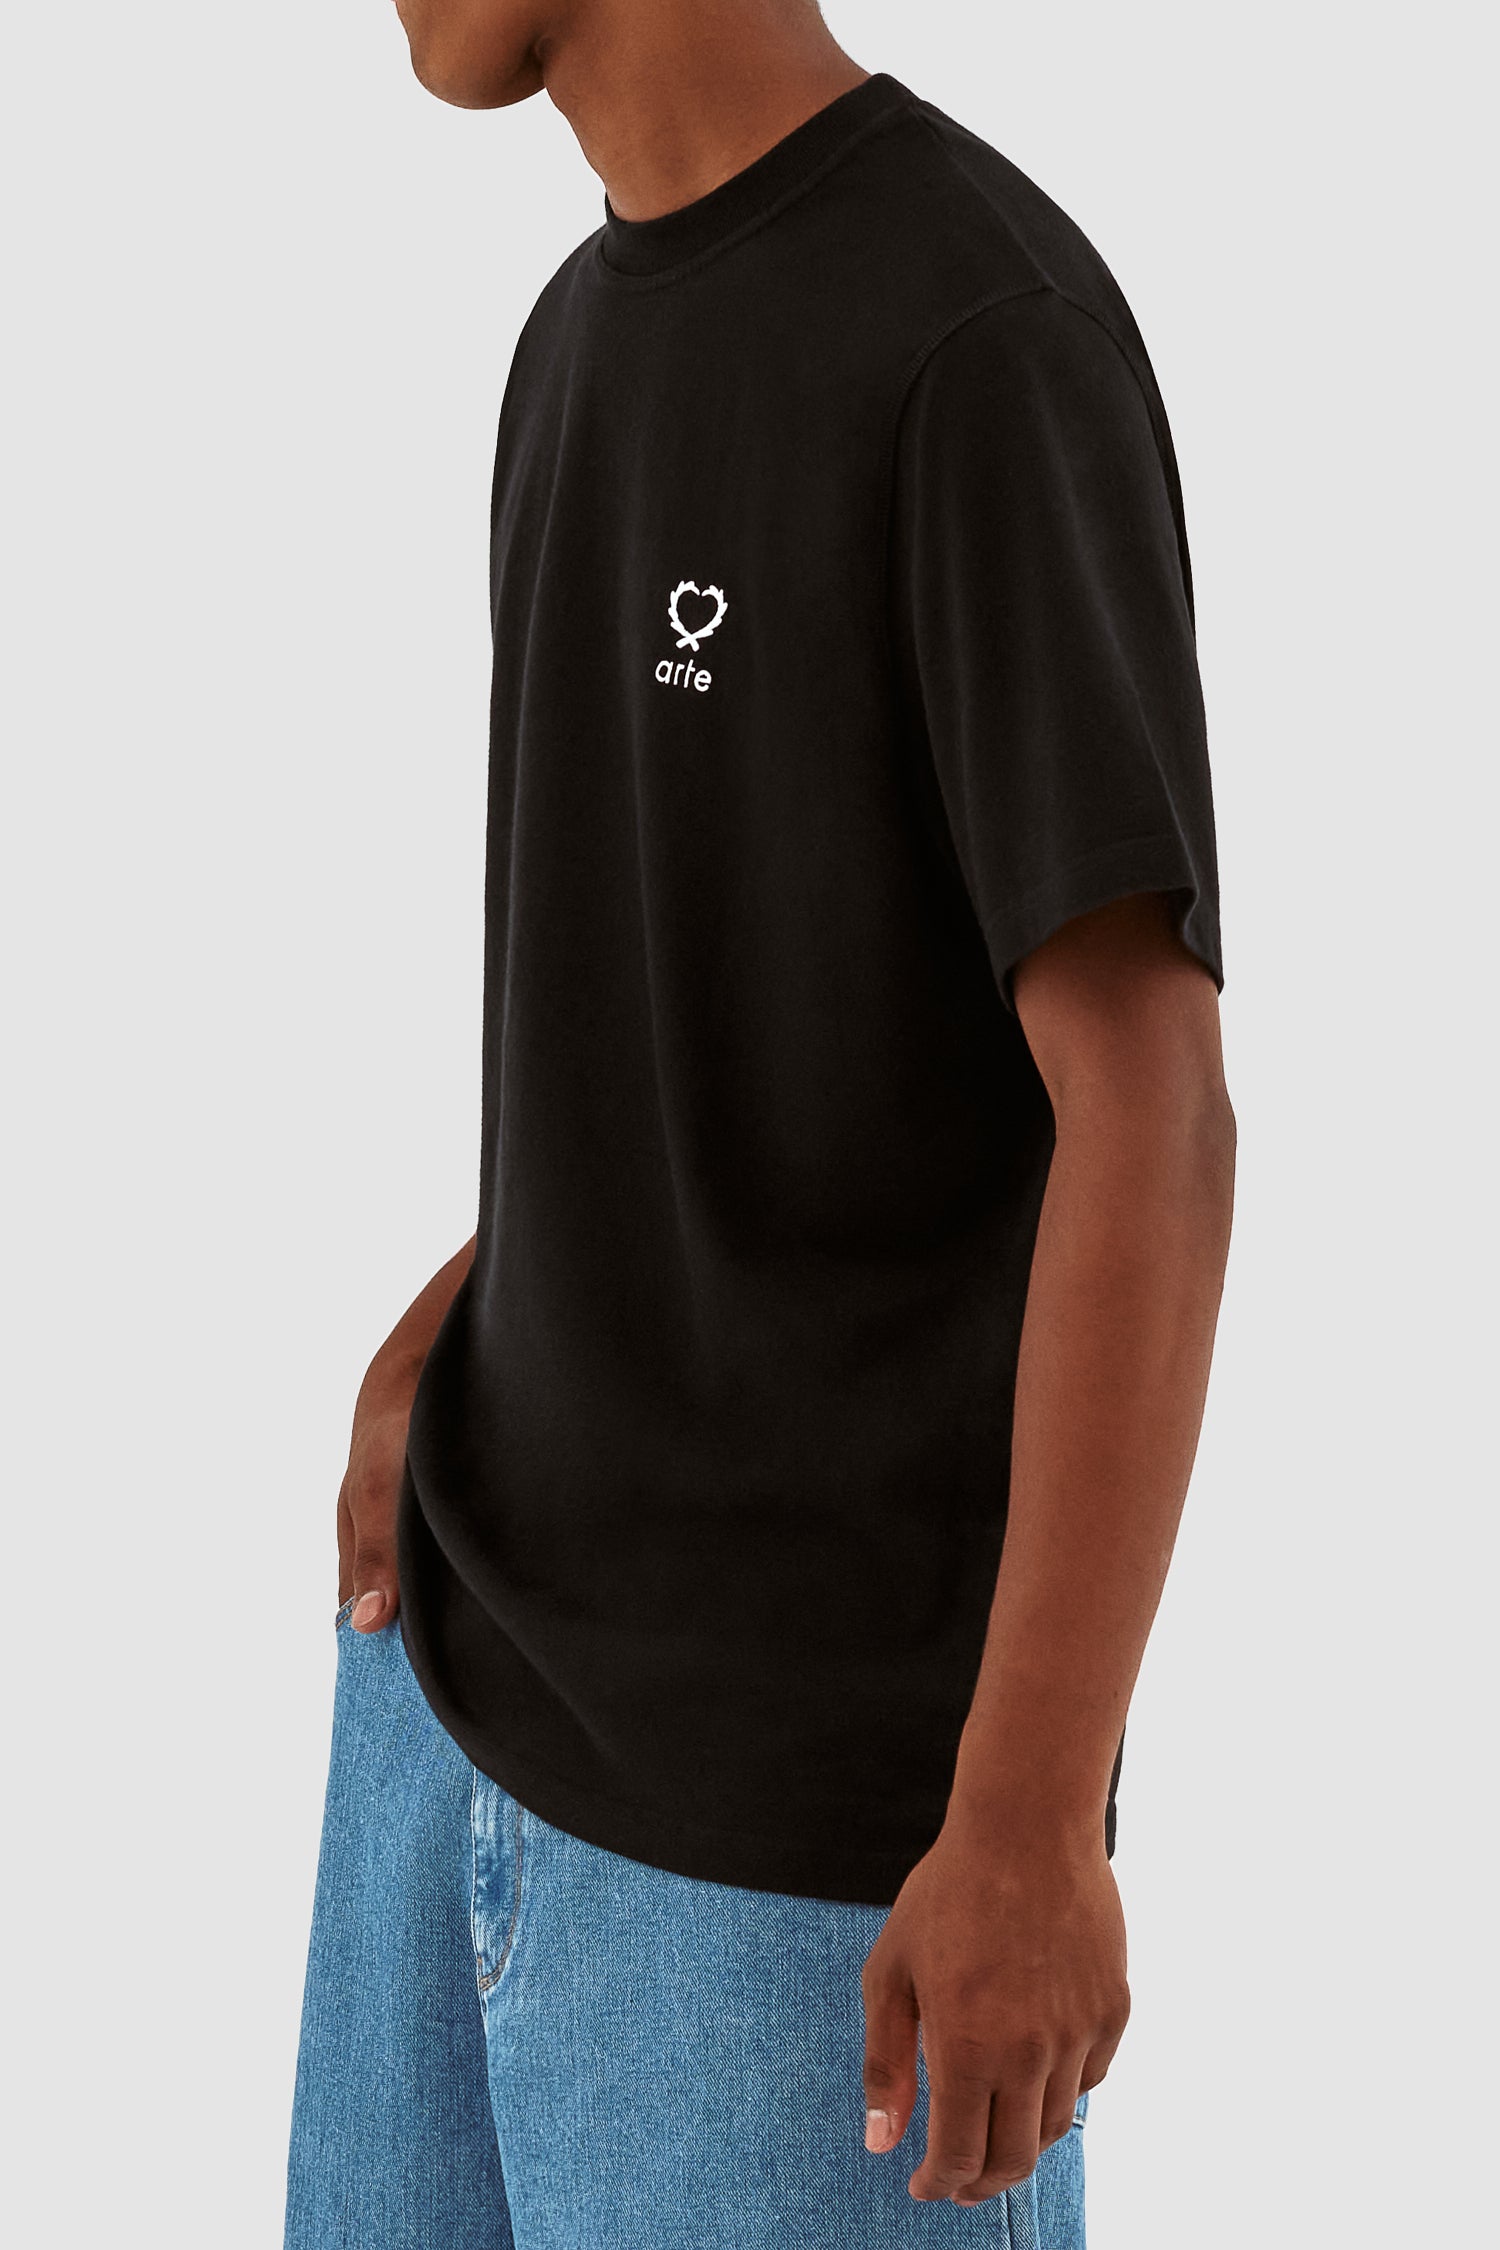 Teo Small Heart T-shirt - Black